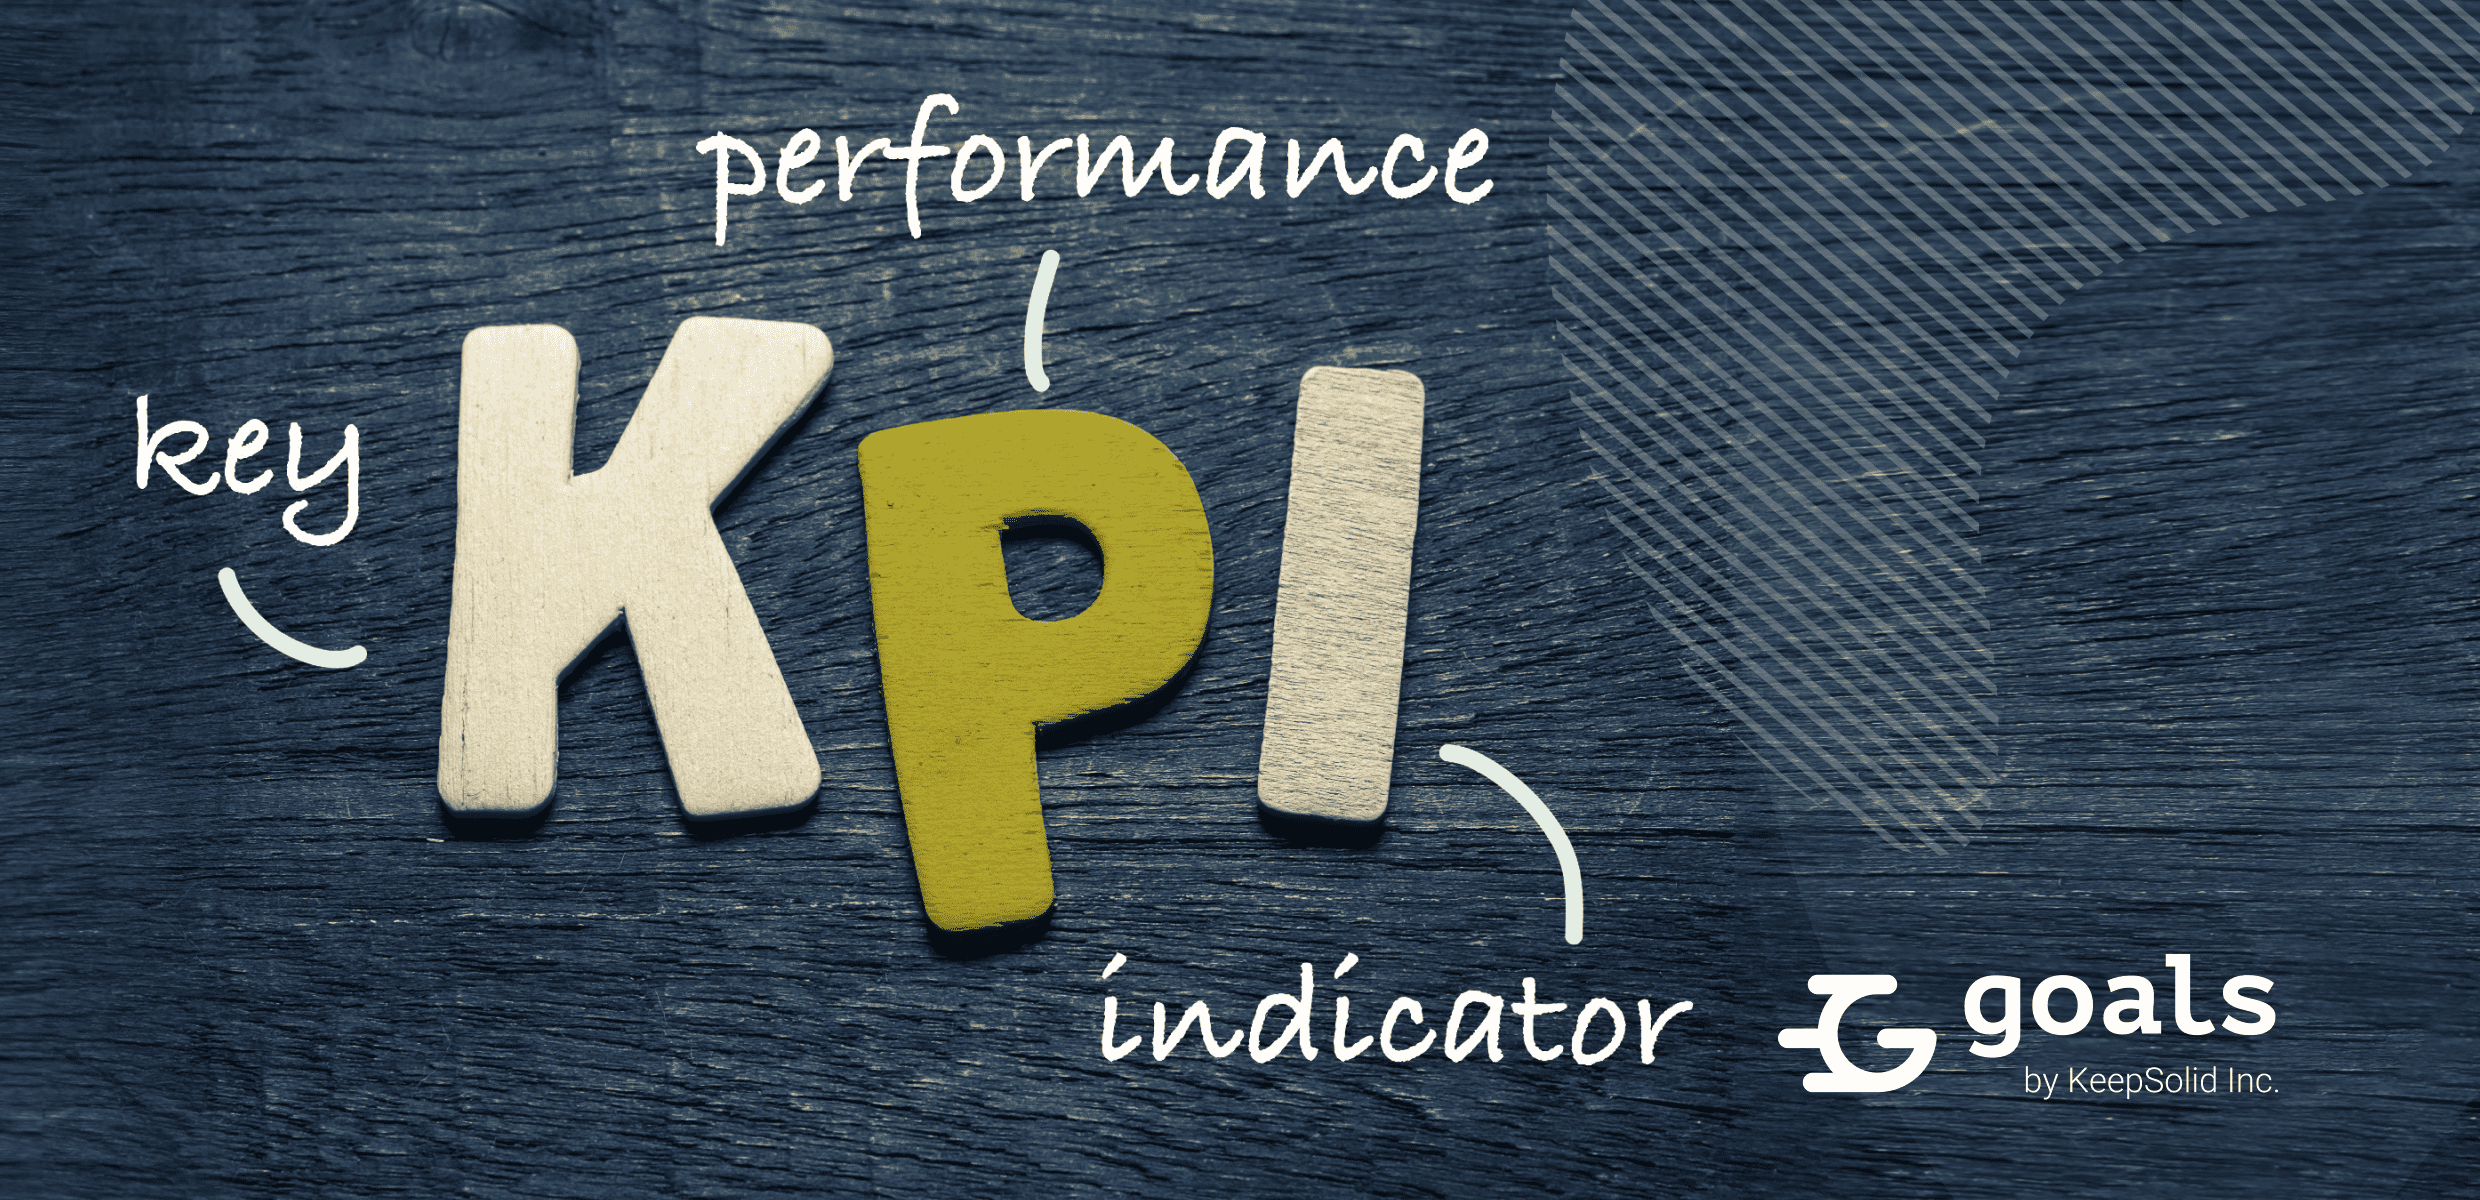 Business KPI (key performance indicator) and key performance metrics